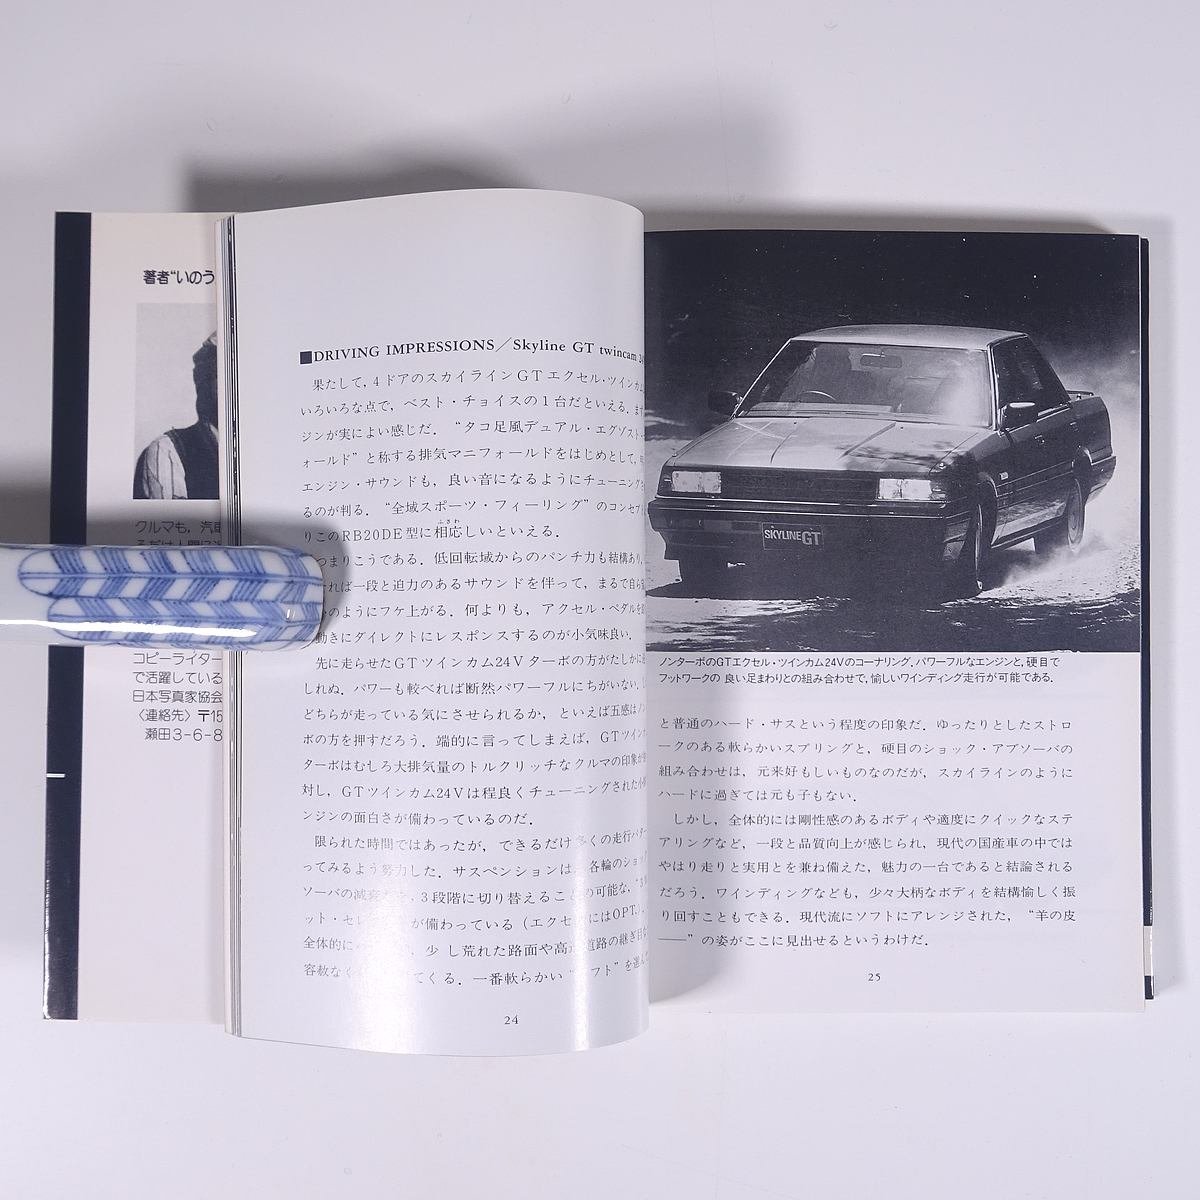  world. famous car 8 NISSAN Nissan Skyline .. ..*.-.. Hoikusha 1985 separate volume photoalbum map version llustrated book automobile car 